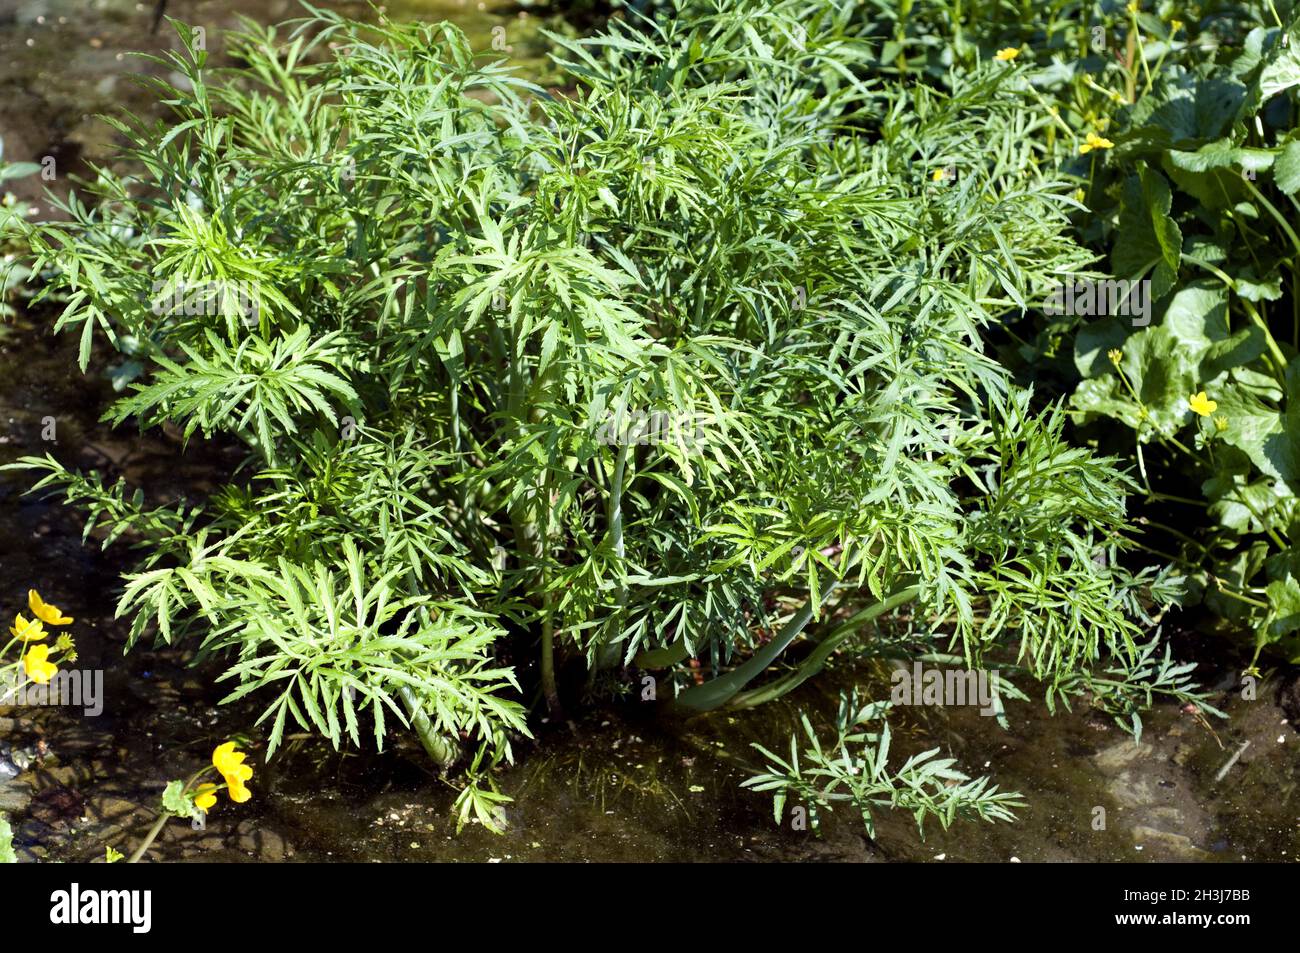 Water hemlock; Cicuta virosa, poisonous plant Stock Photo